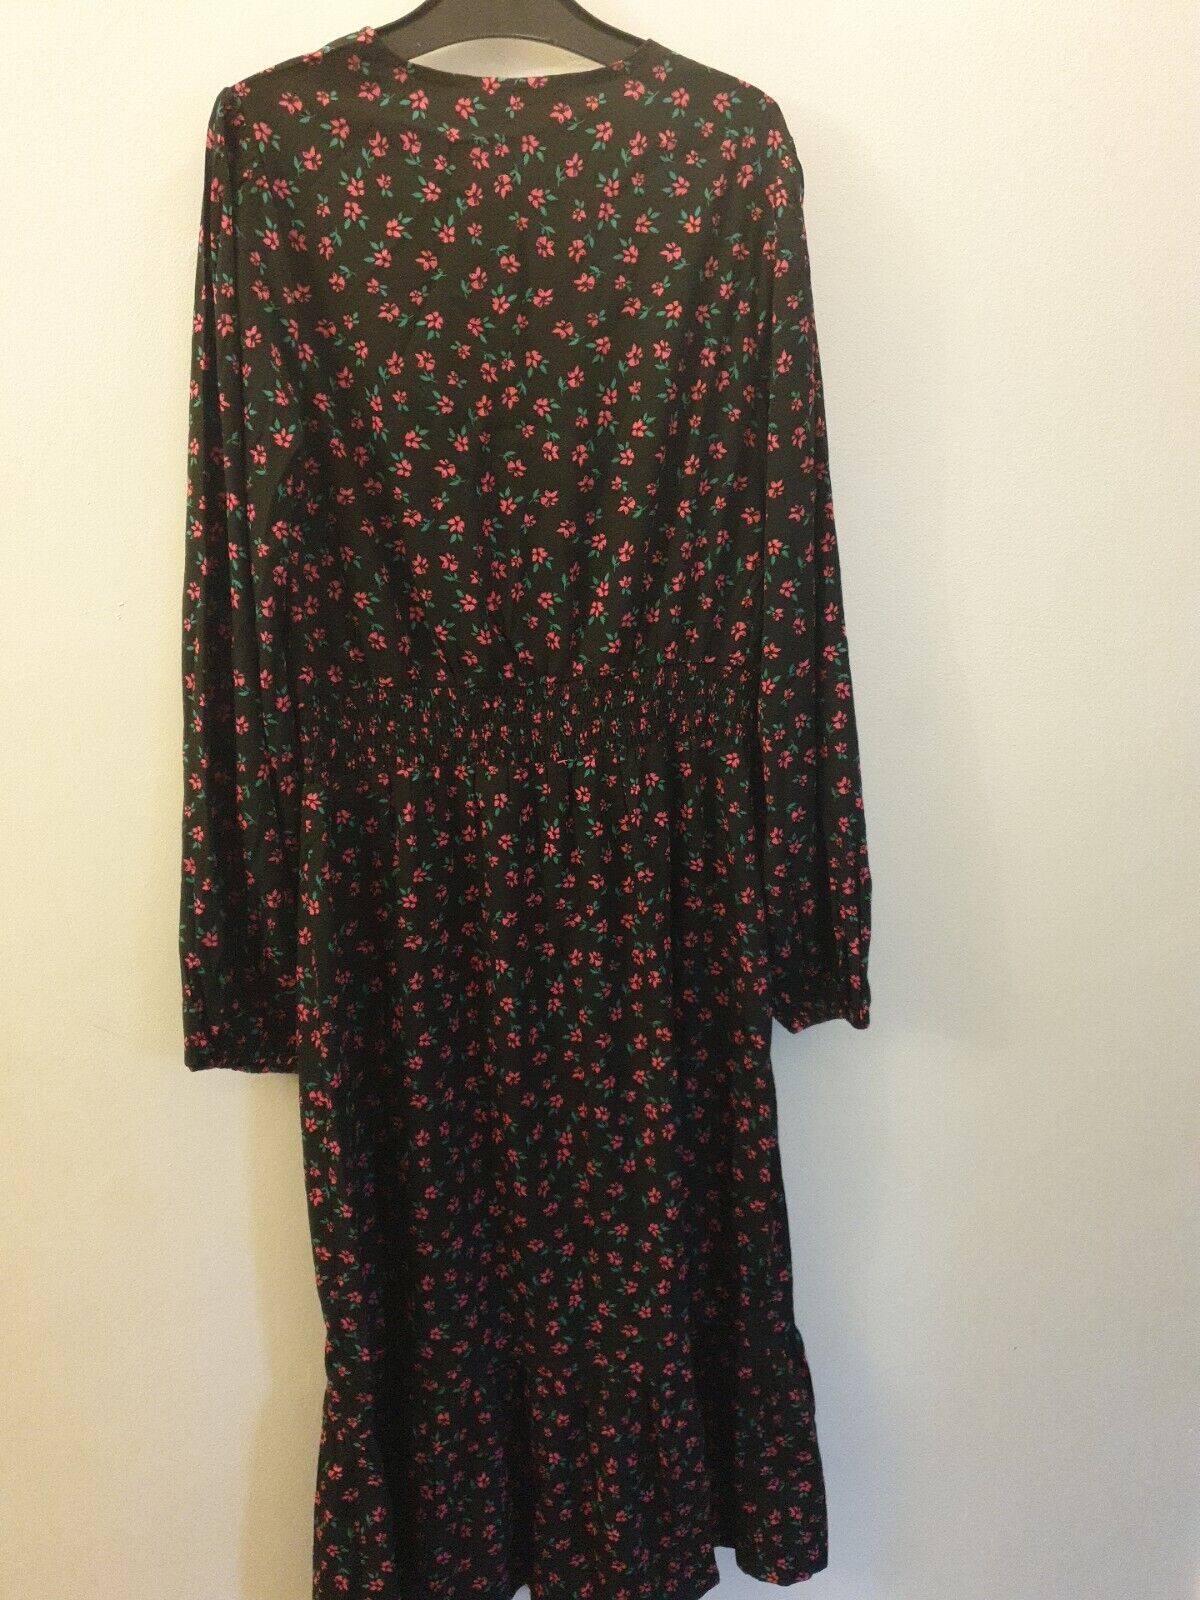 Quiz Ditsy Floral Midi Dress- Black/Pink. UK 10